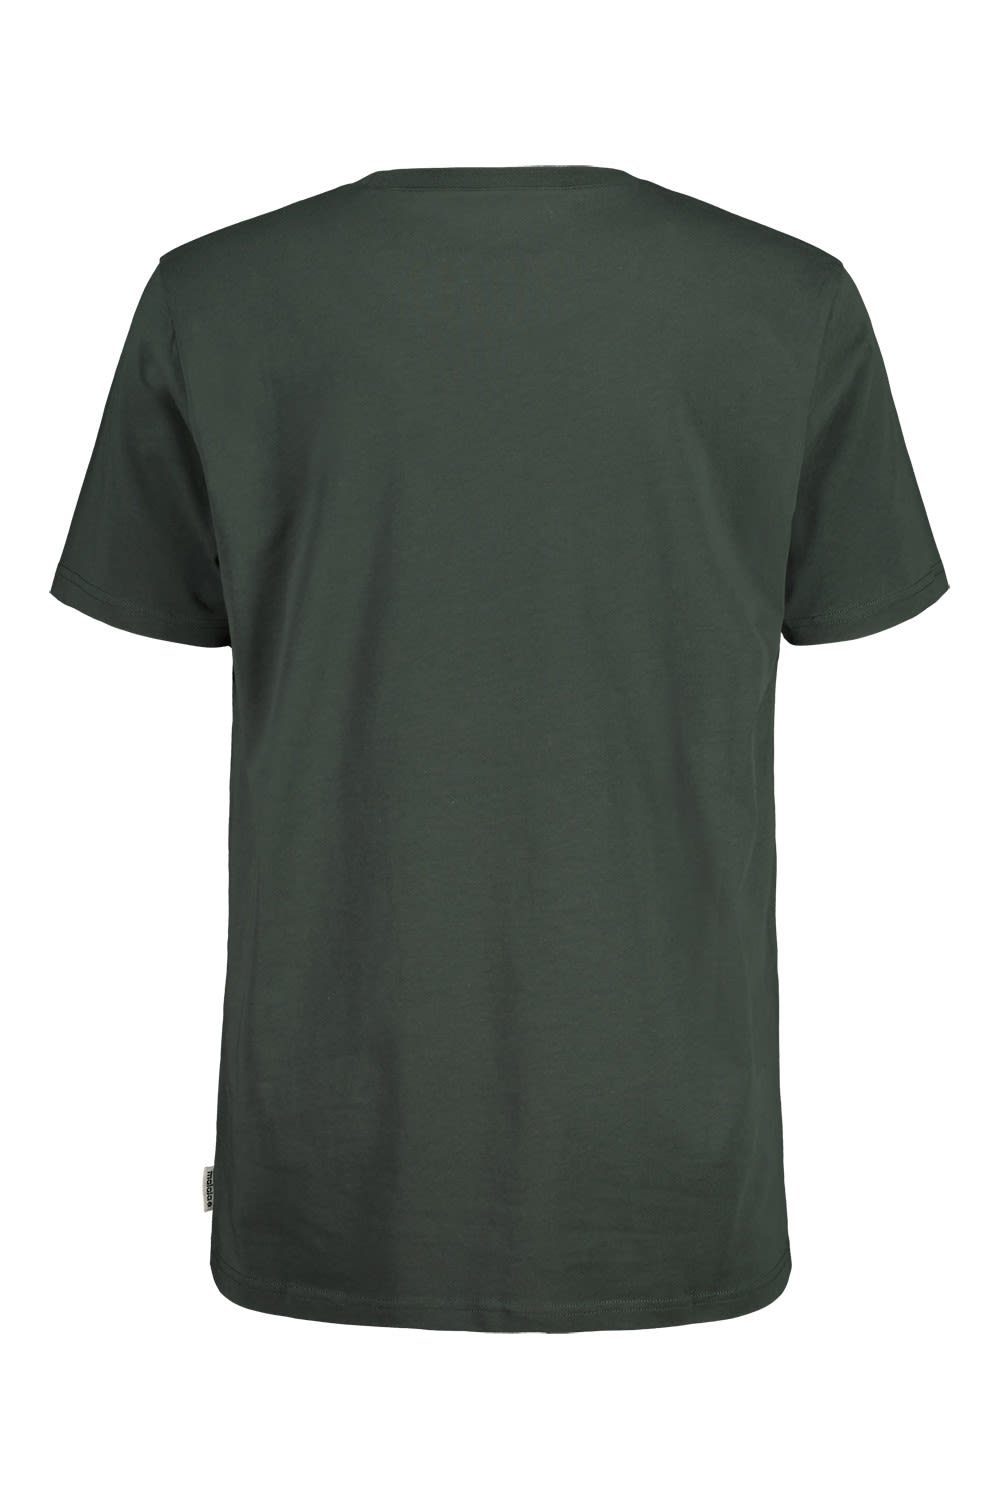 M Kurzarm-Shirt Herren T-shirt Maloja Green T-Shirt Patteriolm. Maloja